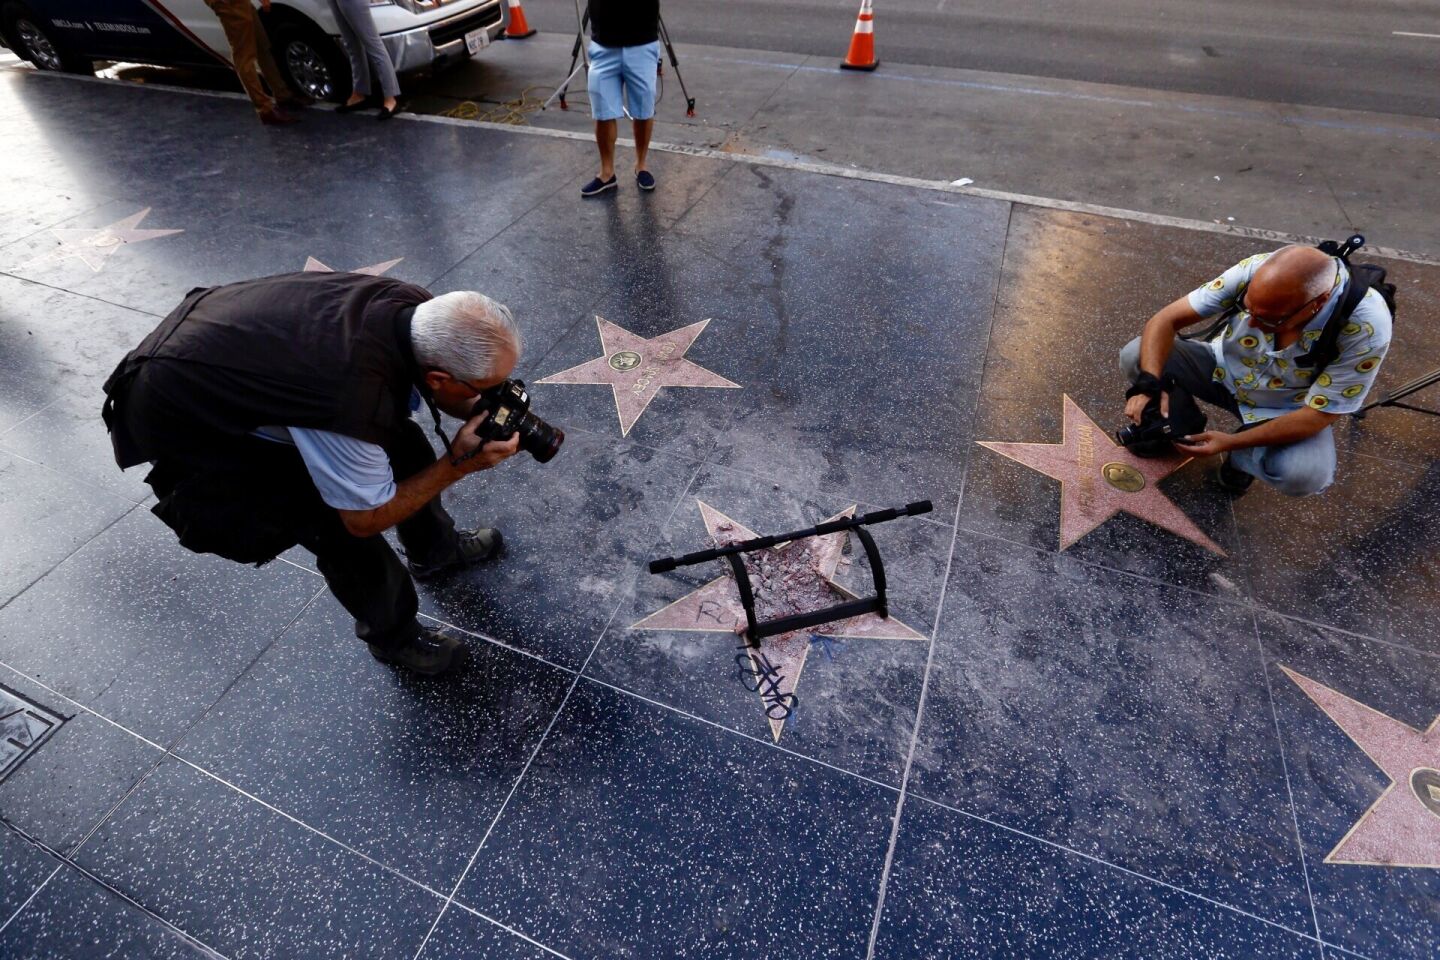 Trump's star on Walk of Fame vandalized -- again